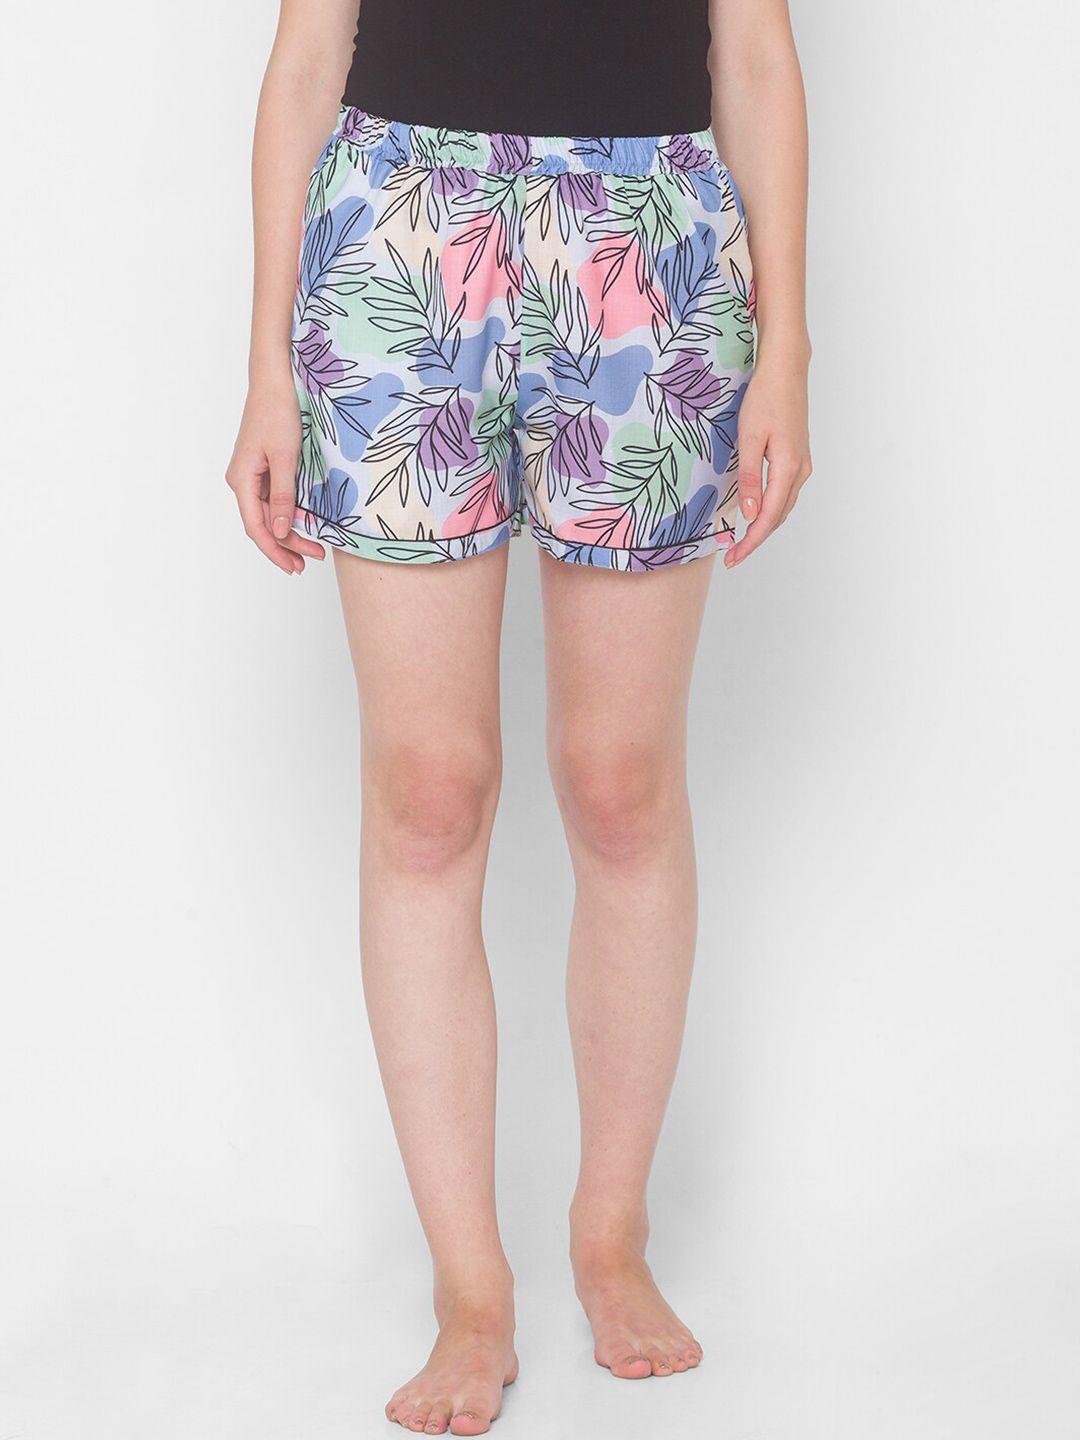 fashionrack-women-cotton-floral-printed-lounge-shorts